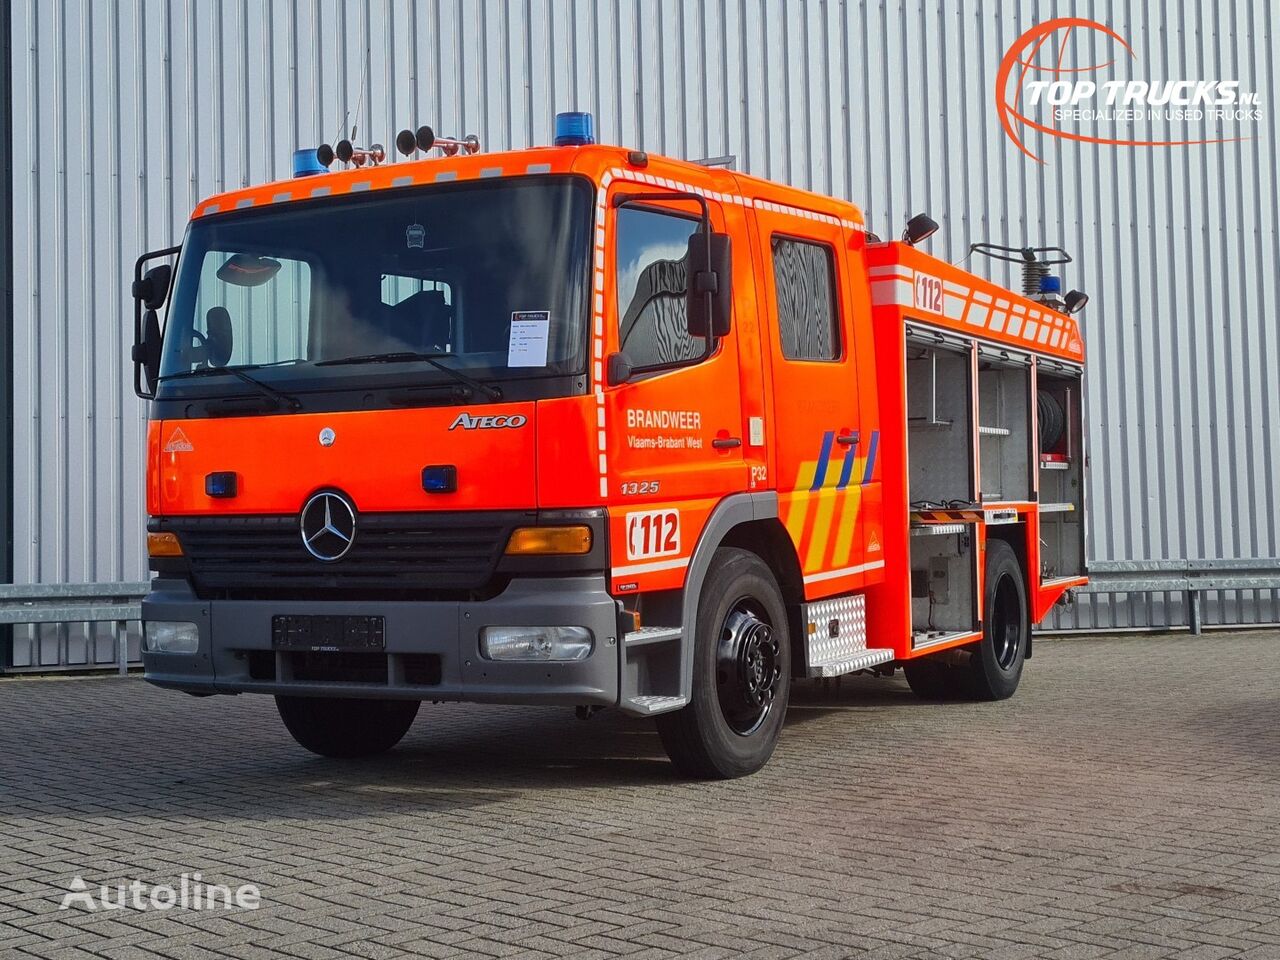 Mercedes-Benz Atego 1325 F 2.400 ltr watertank - Feuerwehr, Fire truck - Crewc paloauto